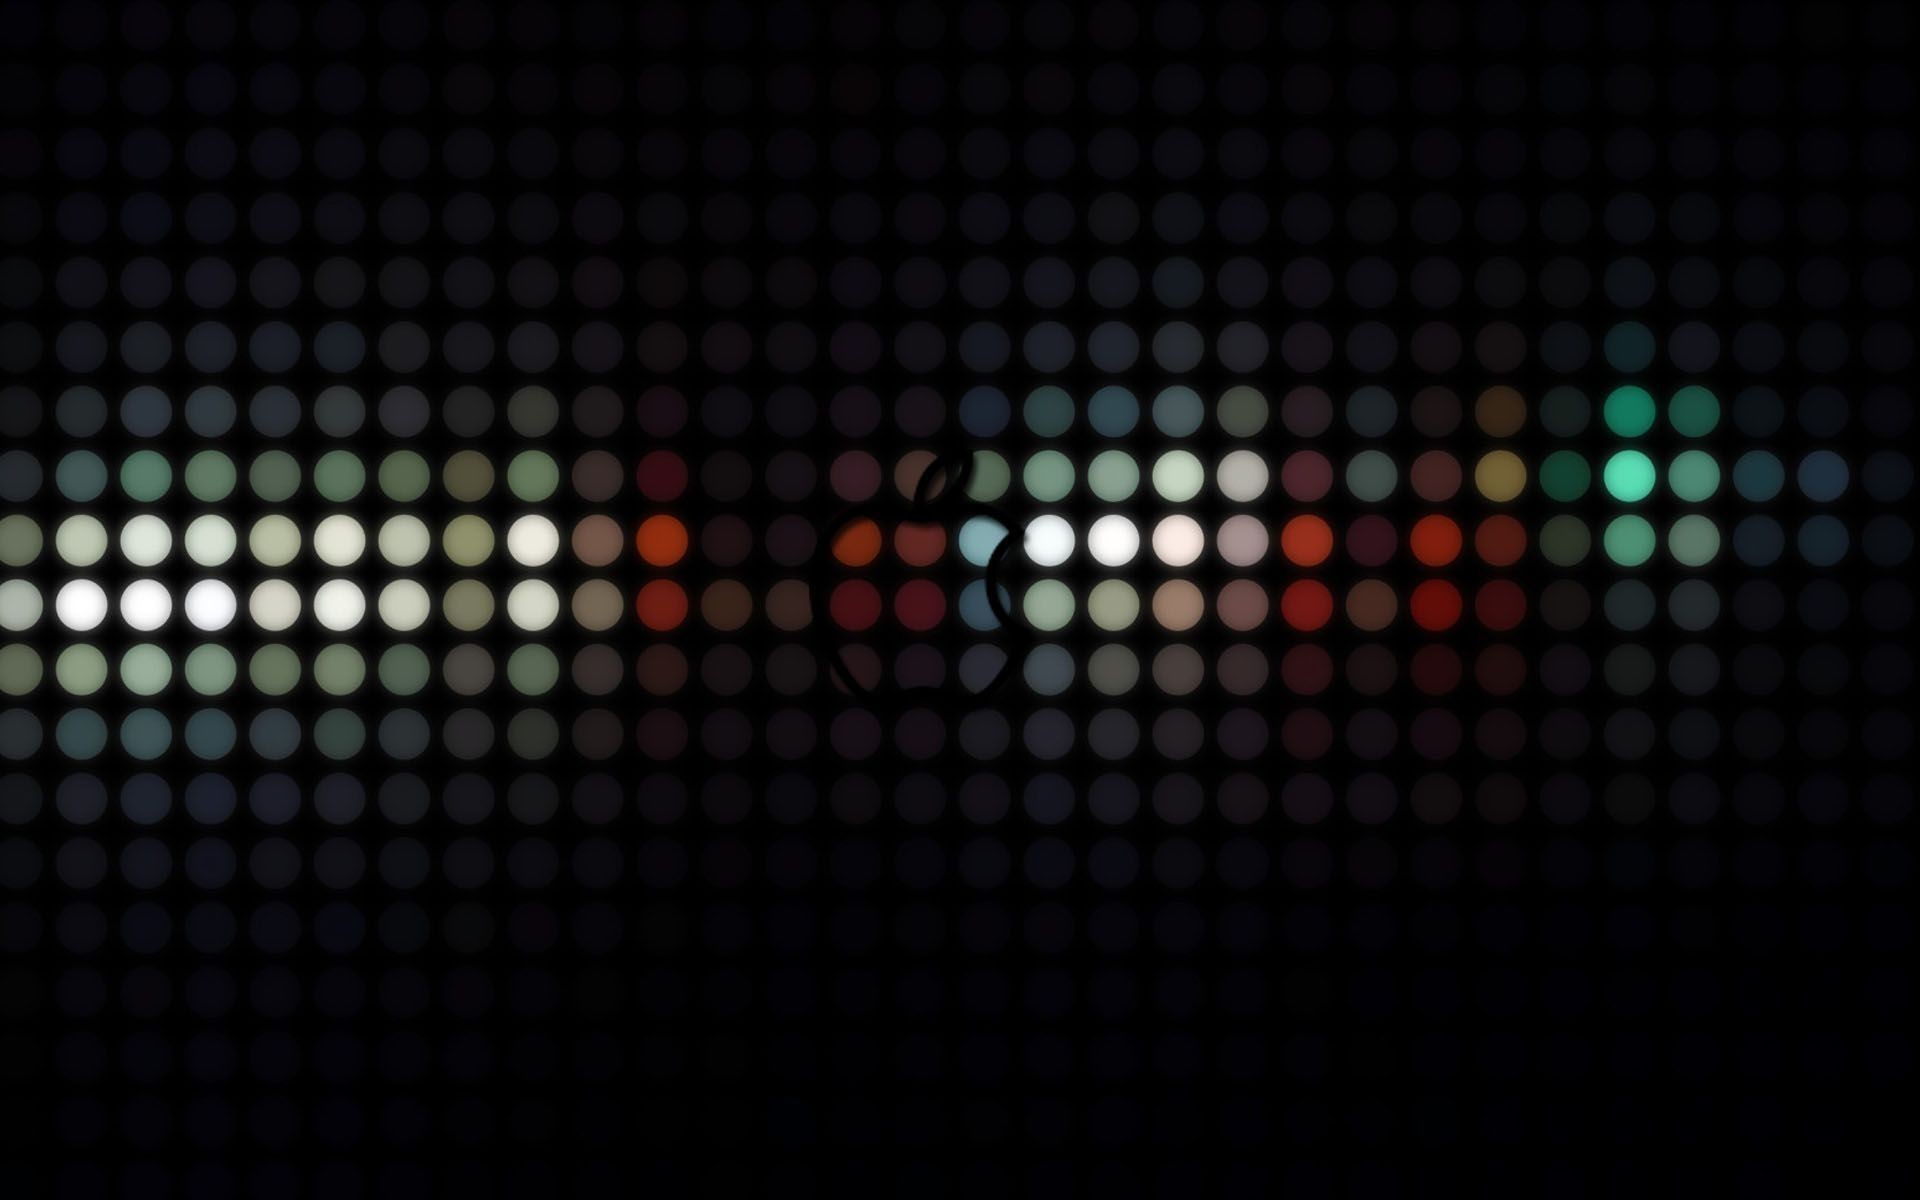 1920x1200 Best desktop background music - Music Desktop Backgrounds Wallpaper Cave  throughout Desktop Background Music | 1920 X 1200 Download Best desktop  background ...